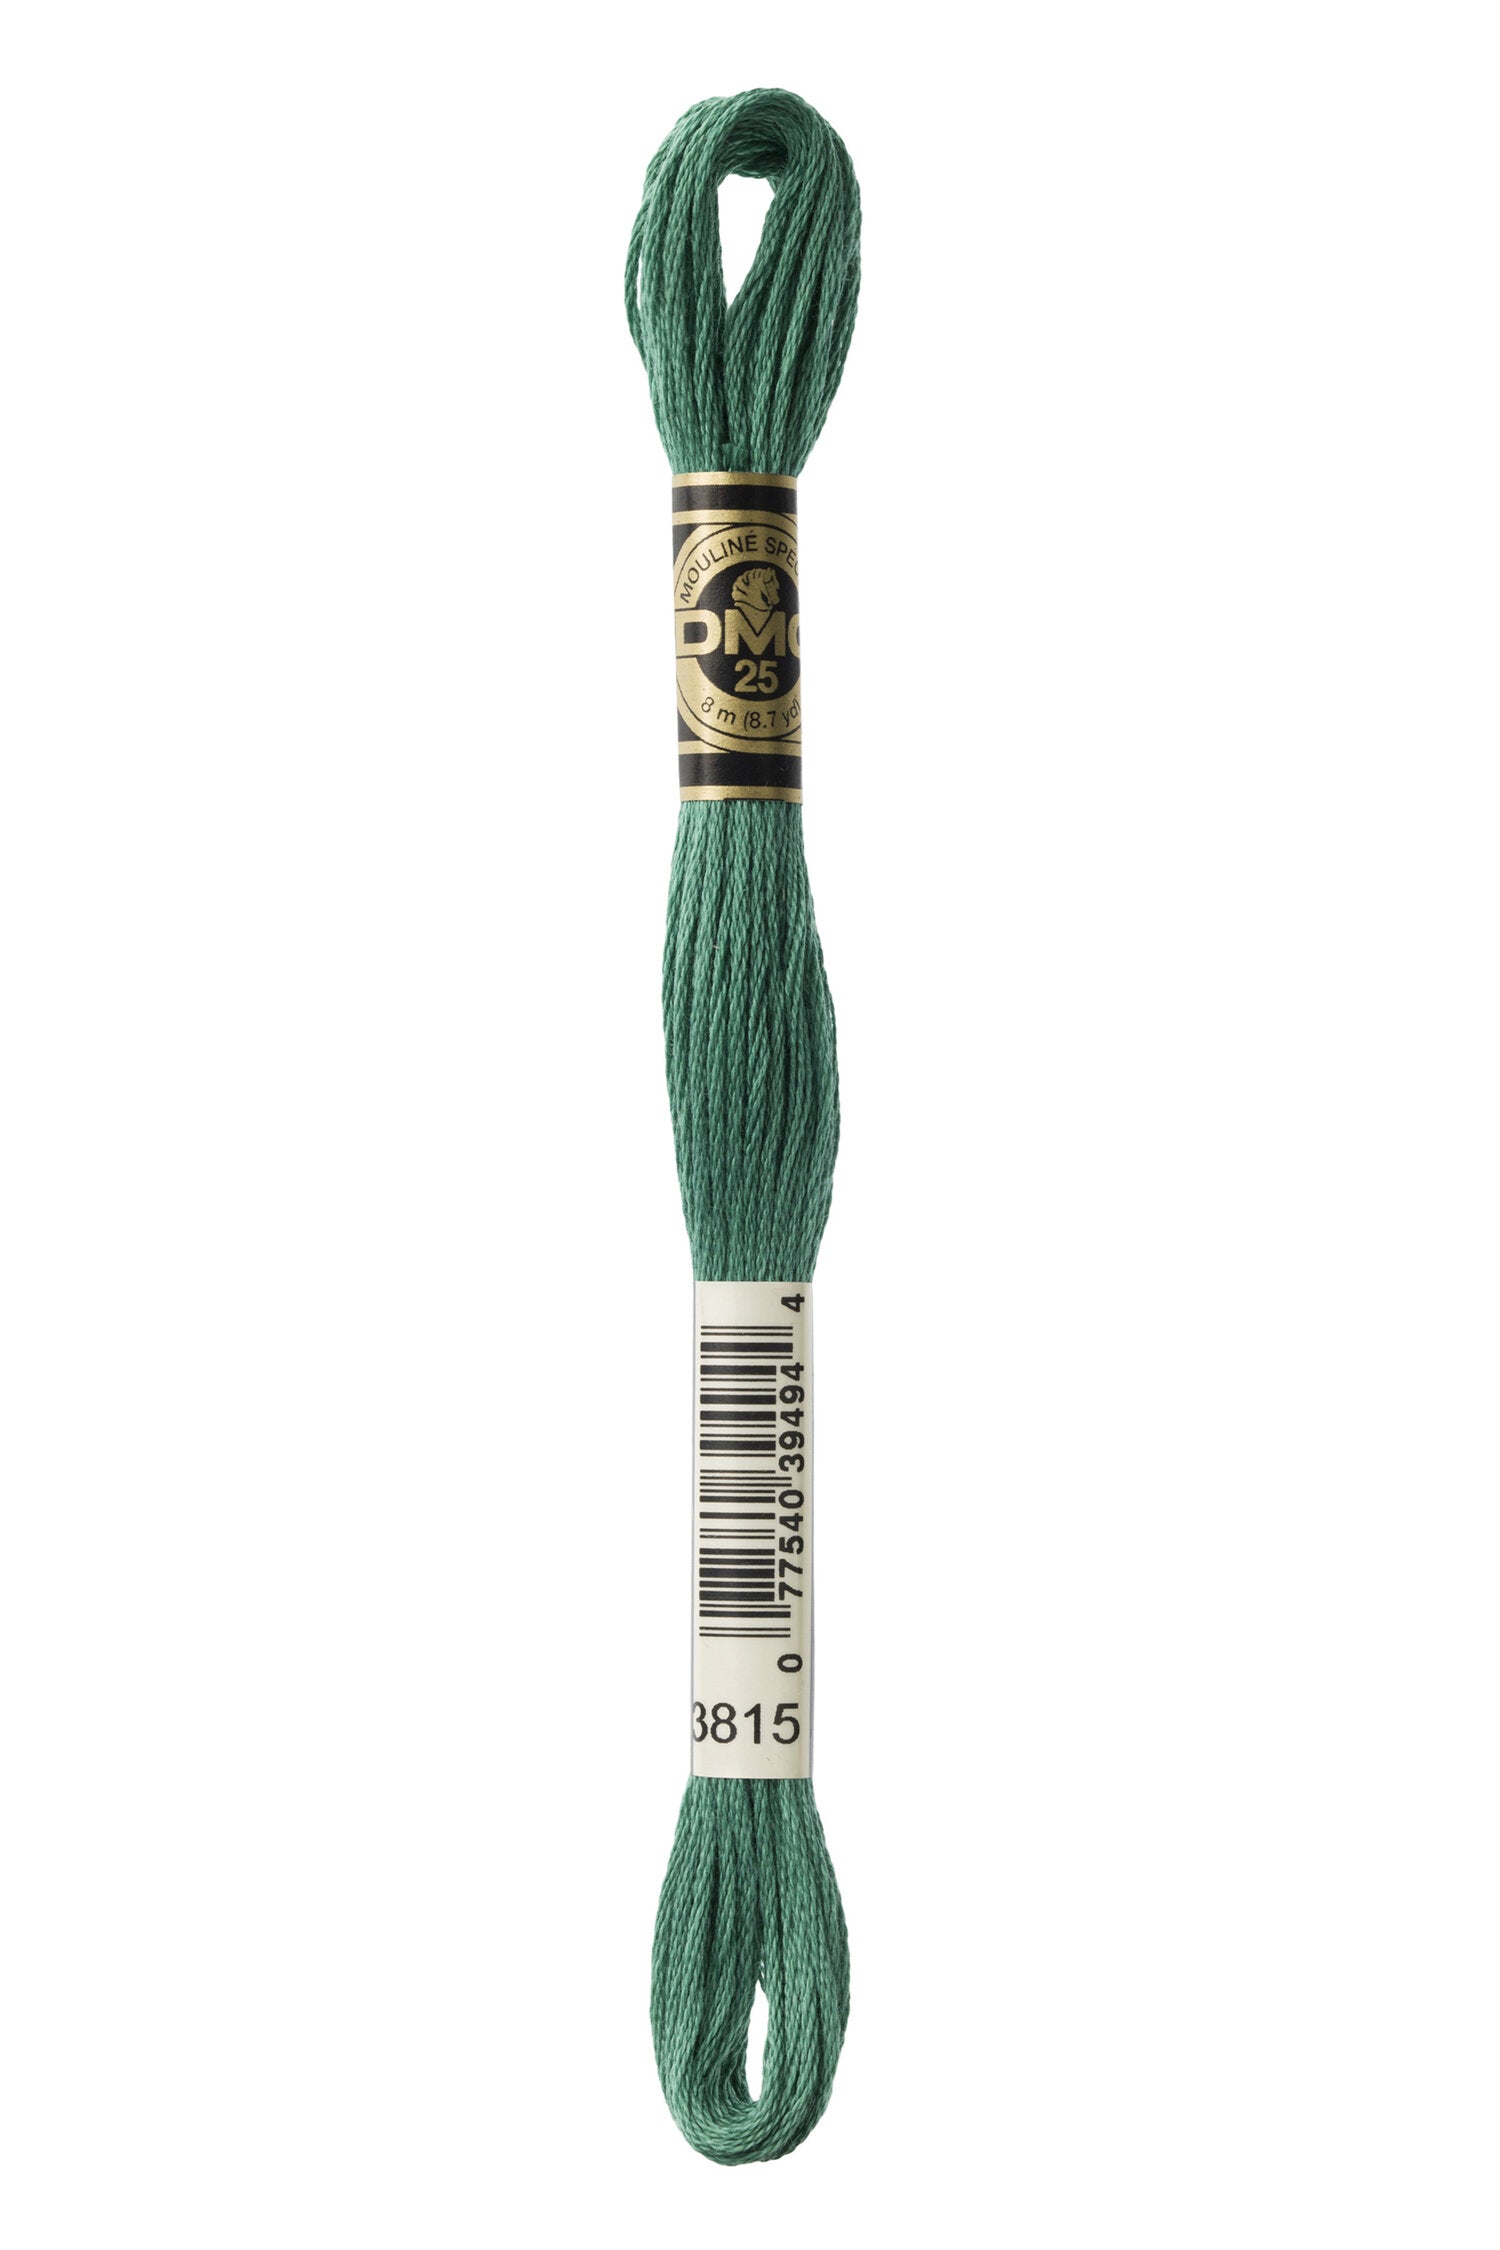 DMC 3815 - Celadon Green - Dark - DMC 6 Strand Embroidery Thread, Thread & Floss, Thread & Floss, The Crafty Grimalkin - A Cross Stitch Store